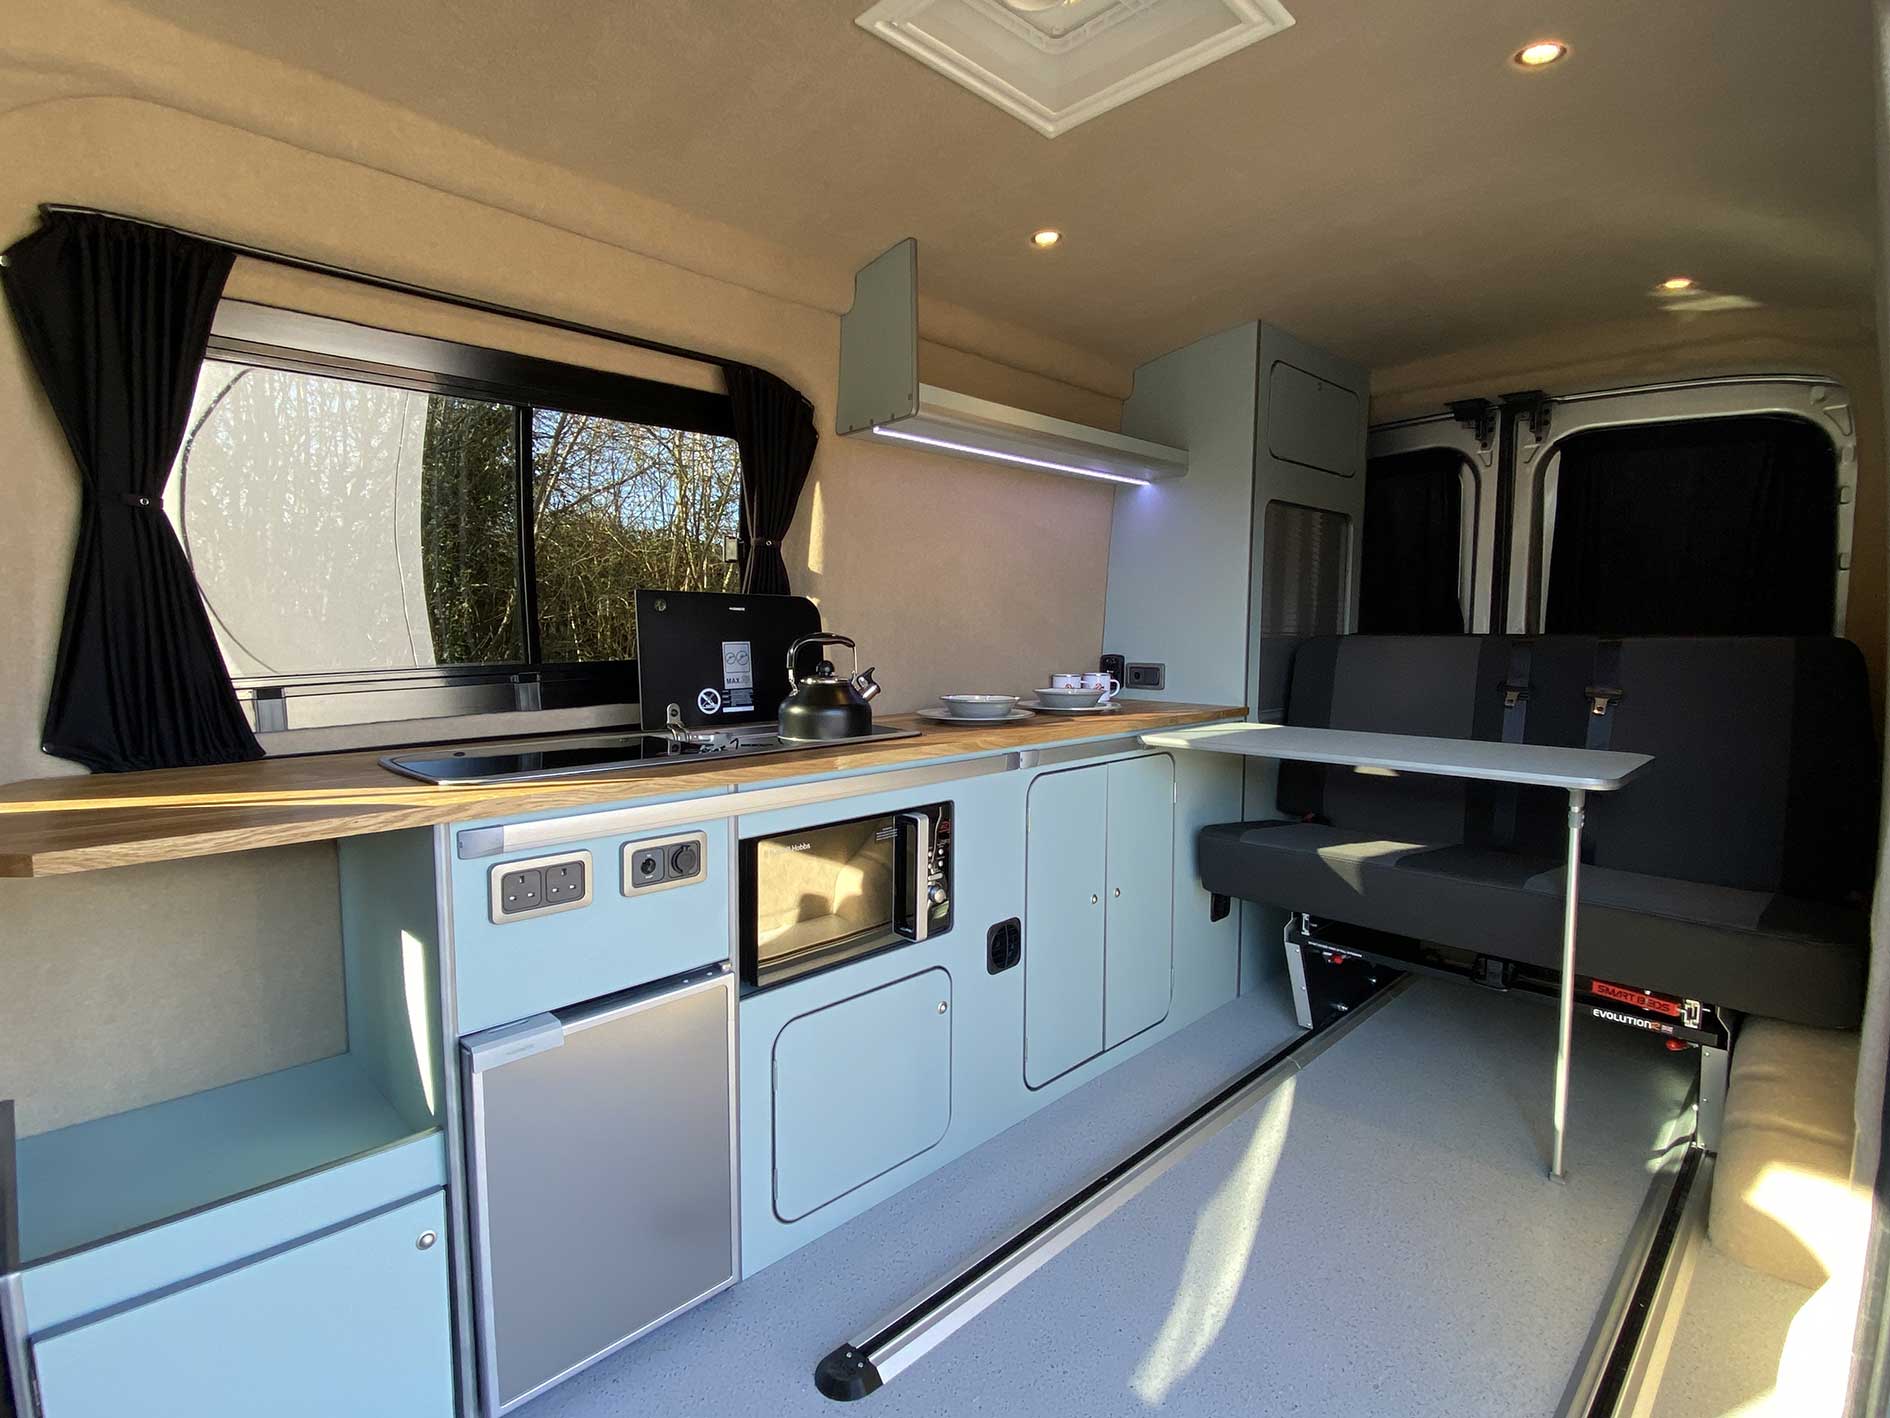 Campervan Conversions UK like this duck egg blue camper interior